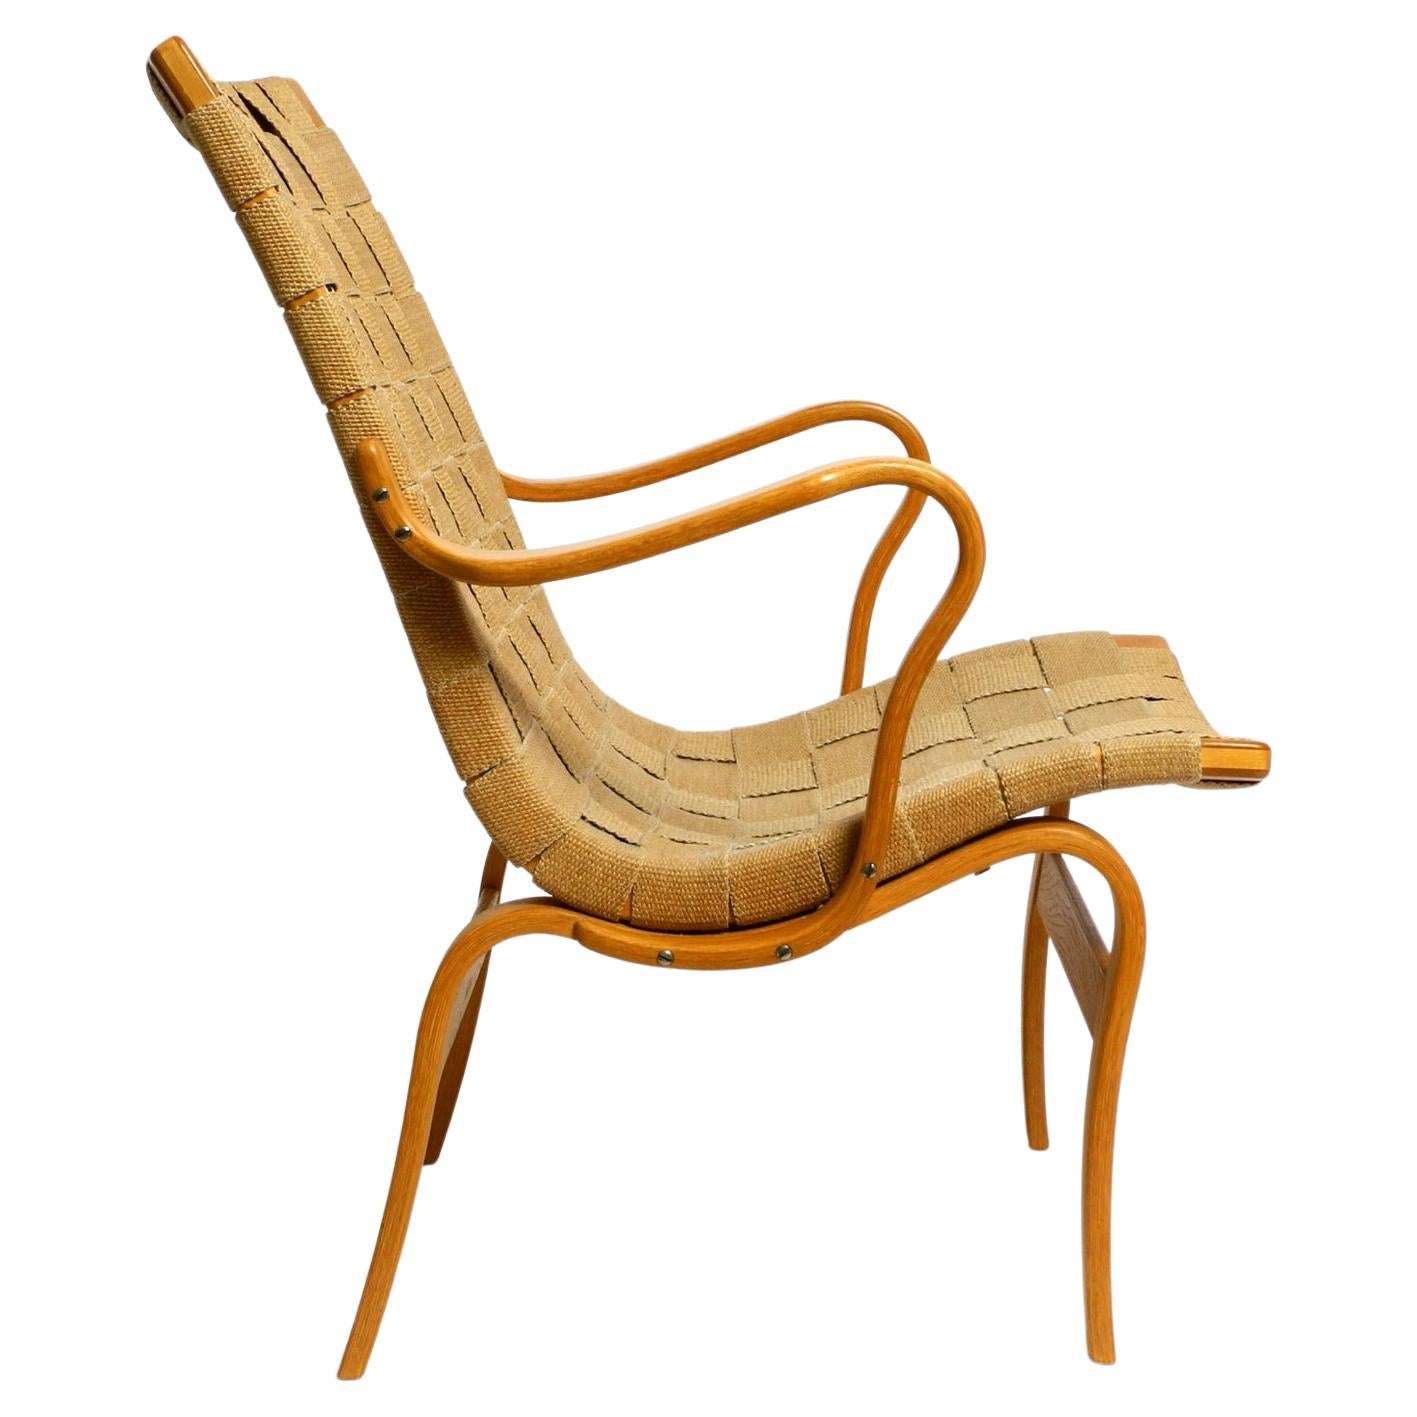 Mid Century armchair model "Eva" by Bruno Mathsson made of birch and hemp weave